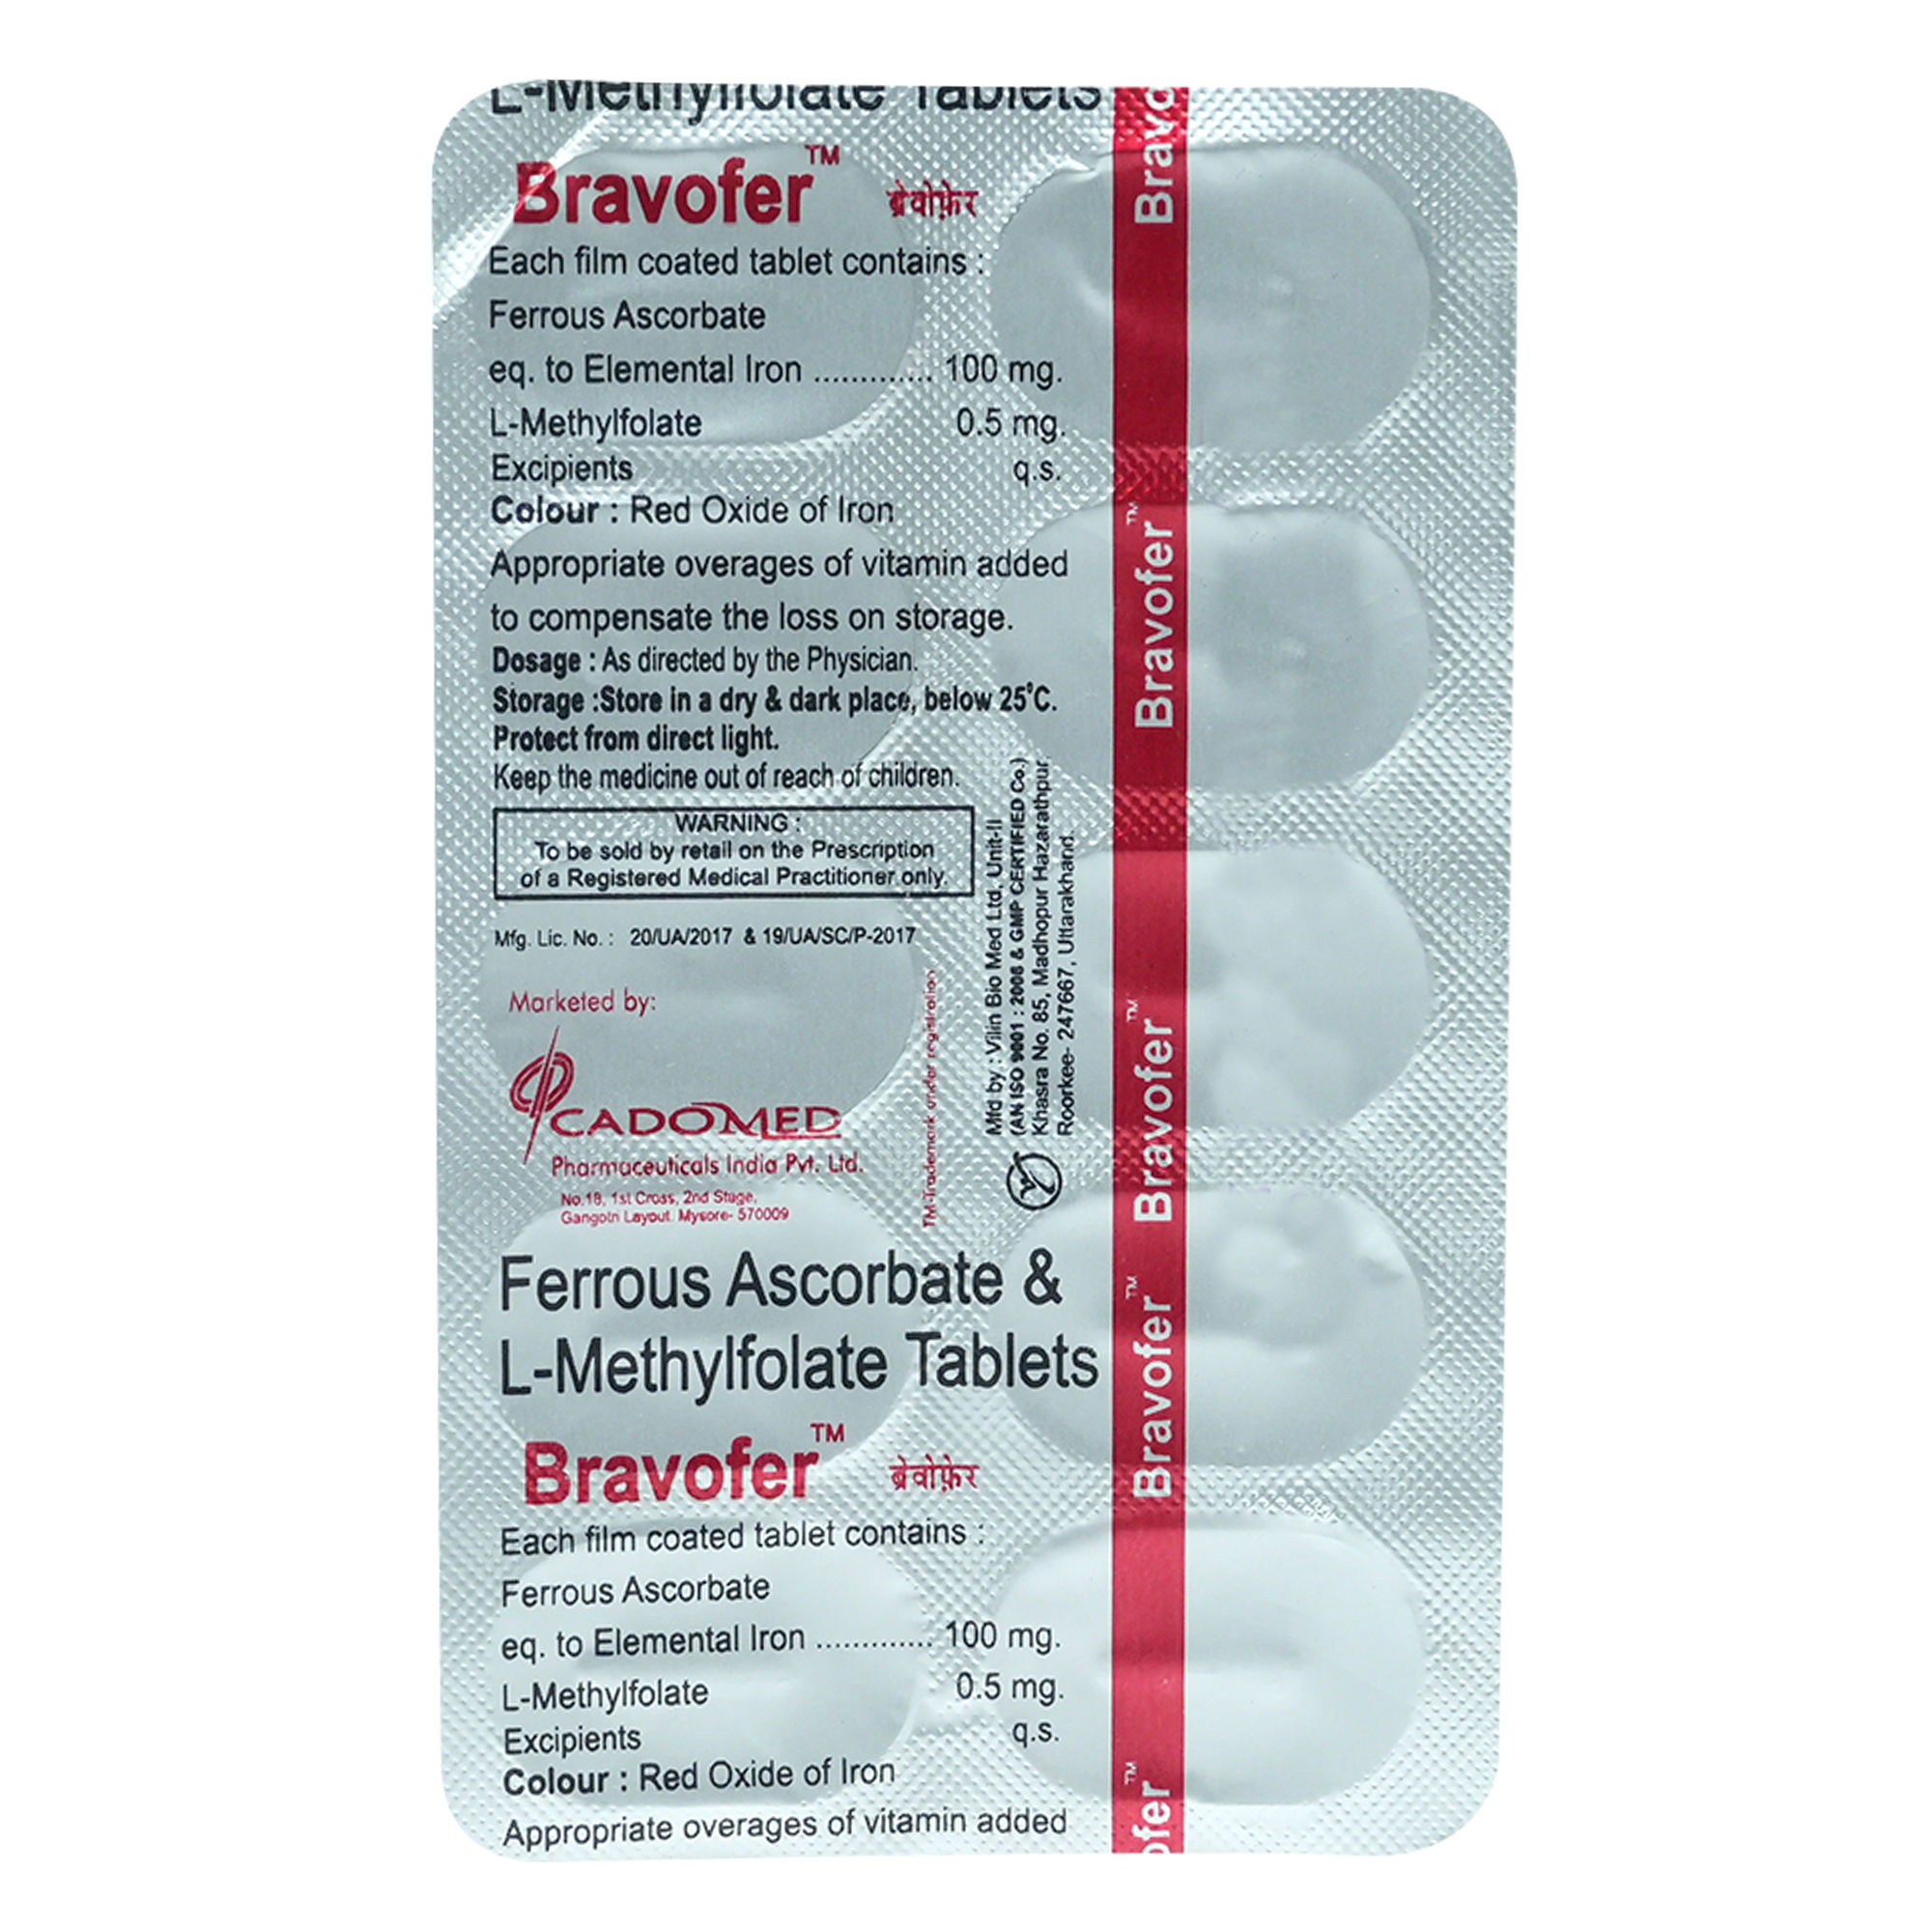 Bravofer Tablet | Uses, Side Effects, Price | Apollo Pharmacy